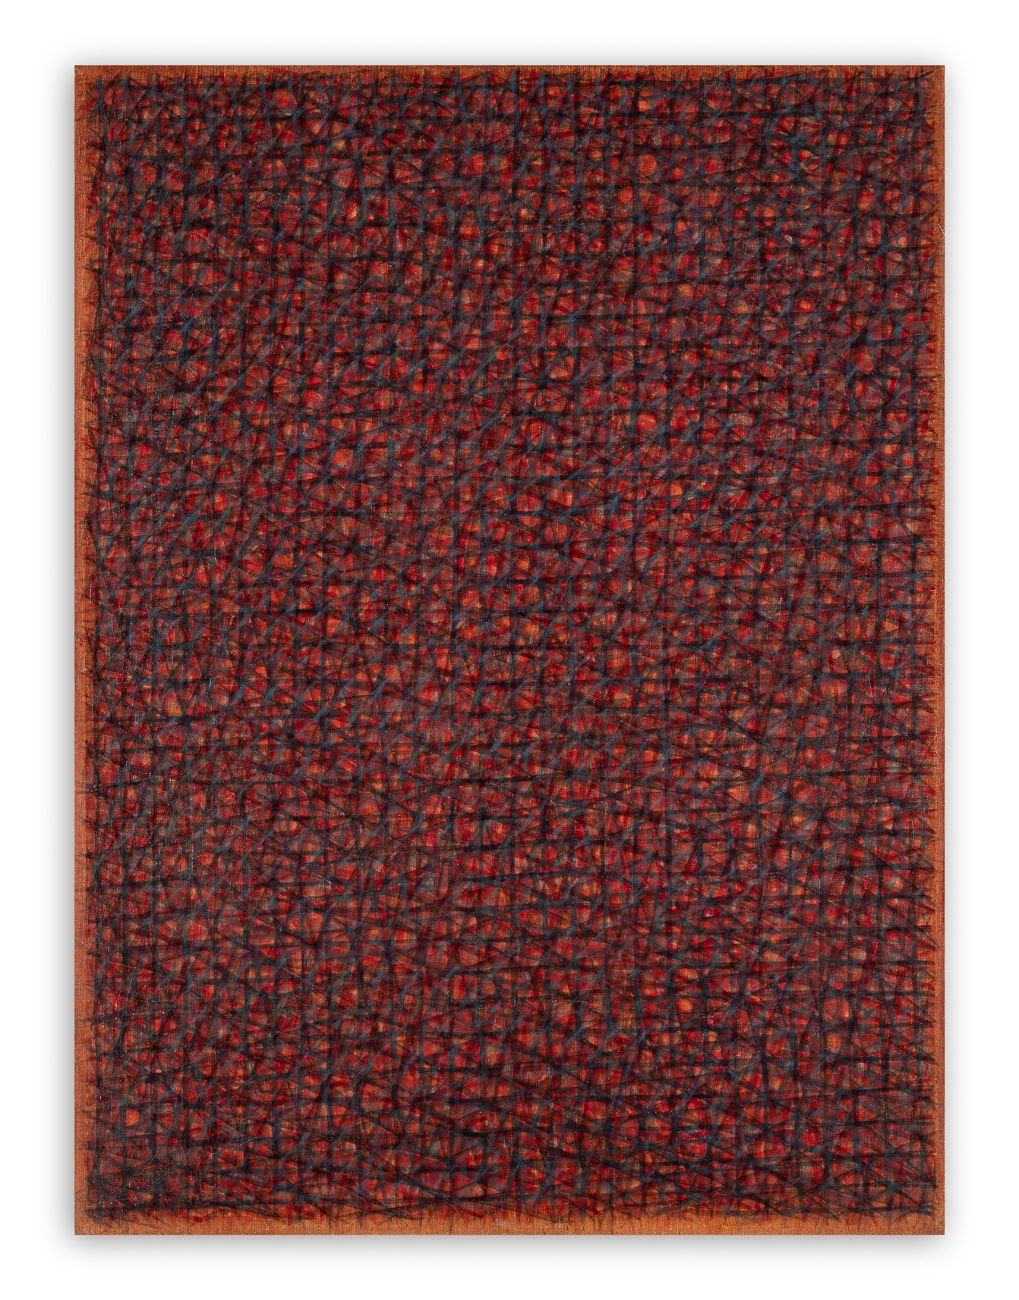 PIERO DORAZIO (1927-2005) - In pectore I, 1962 Óleo sobre lienzo
73,2x54,2 cm
Fi&hellip;